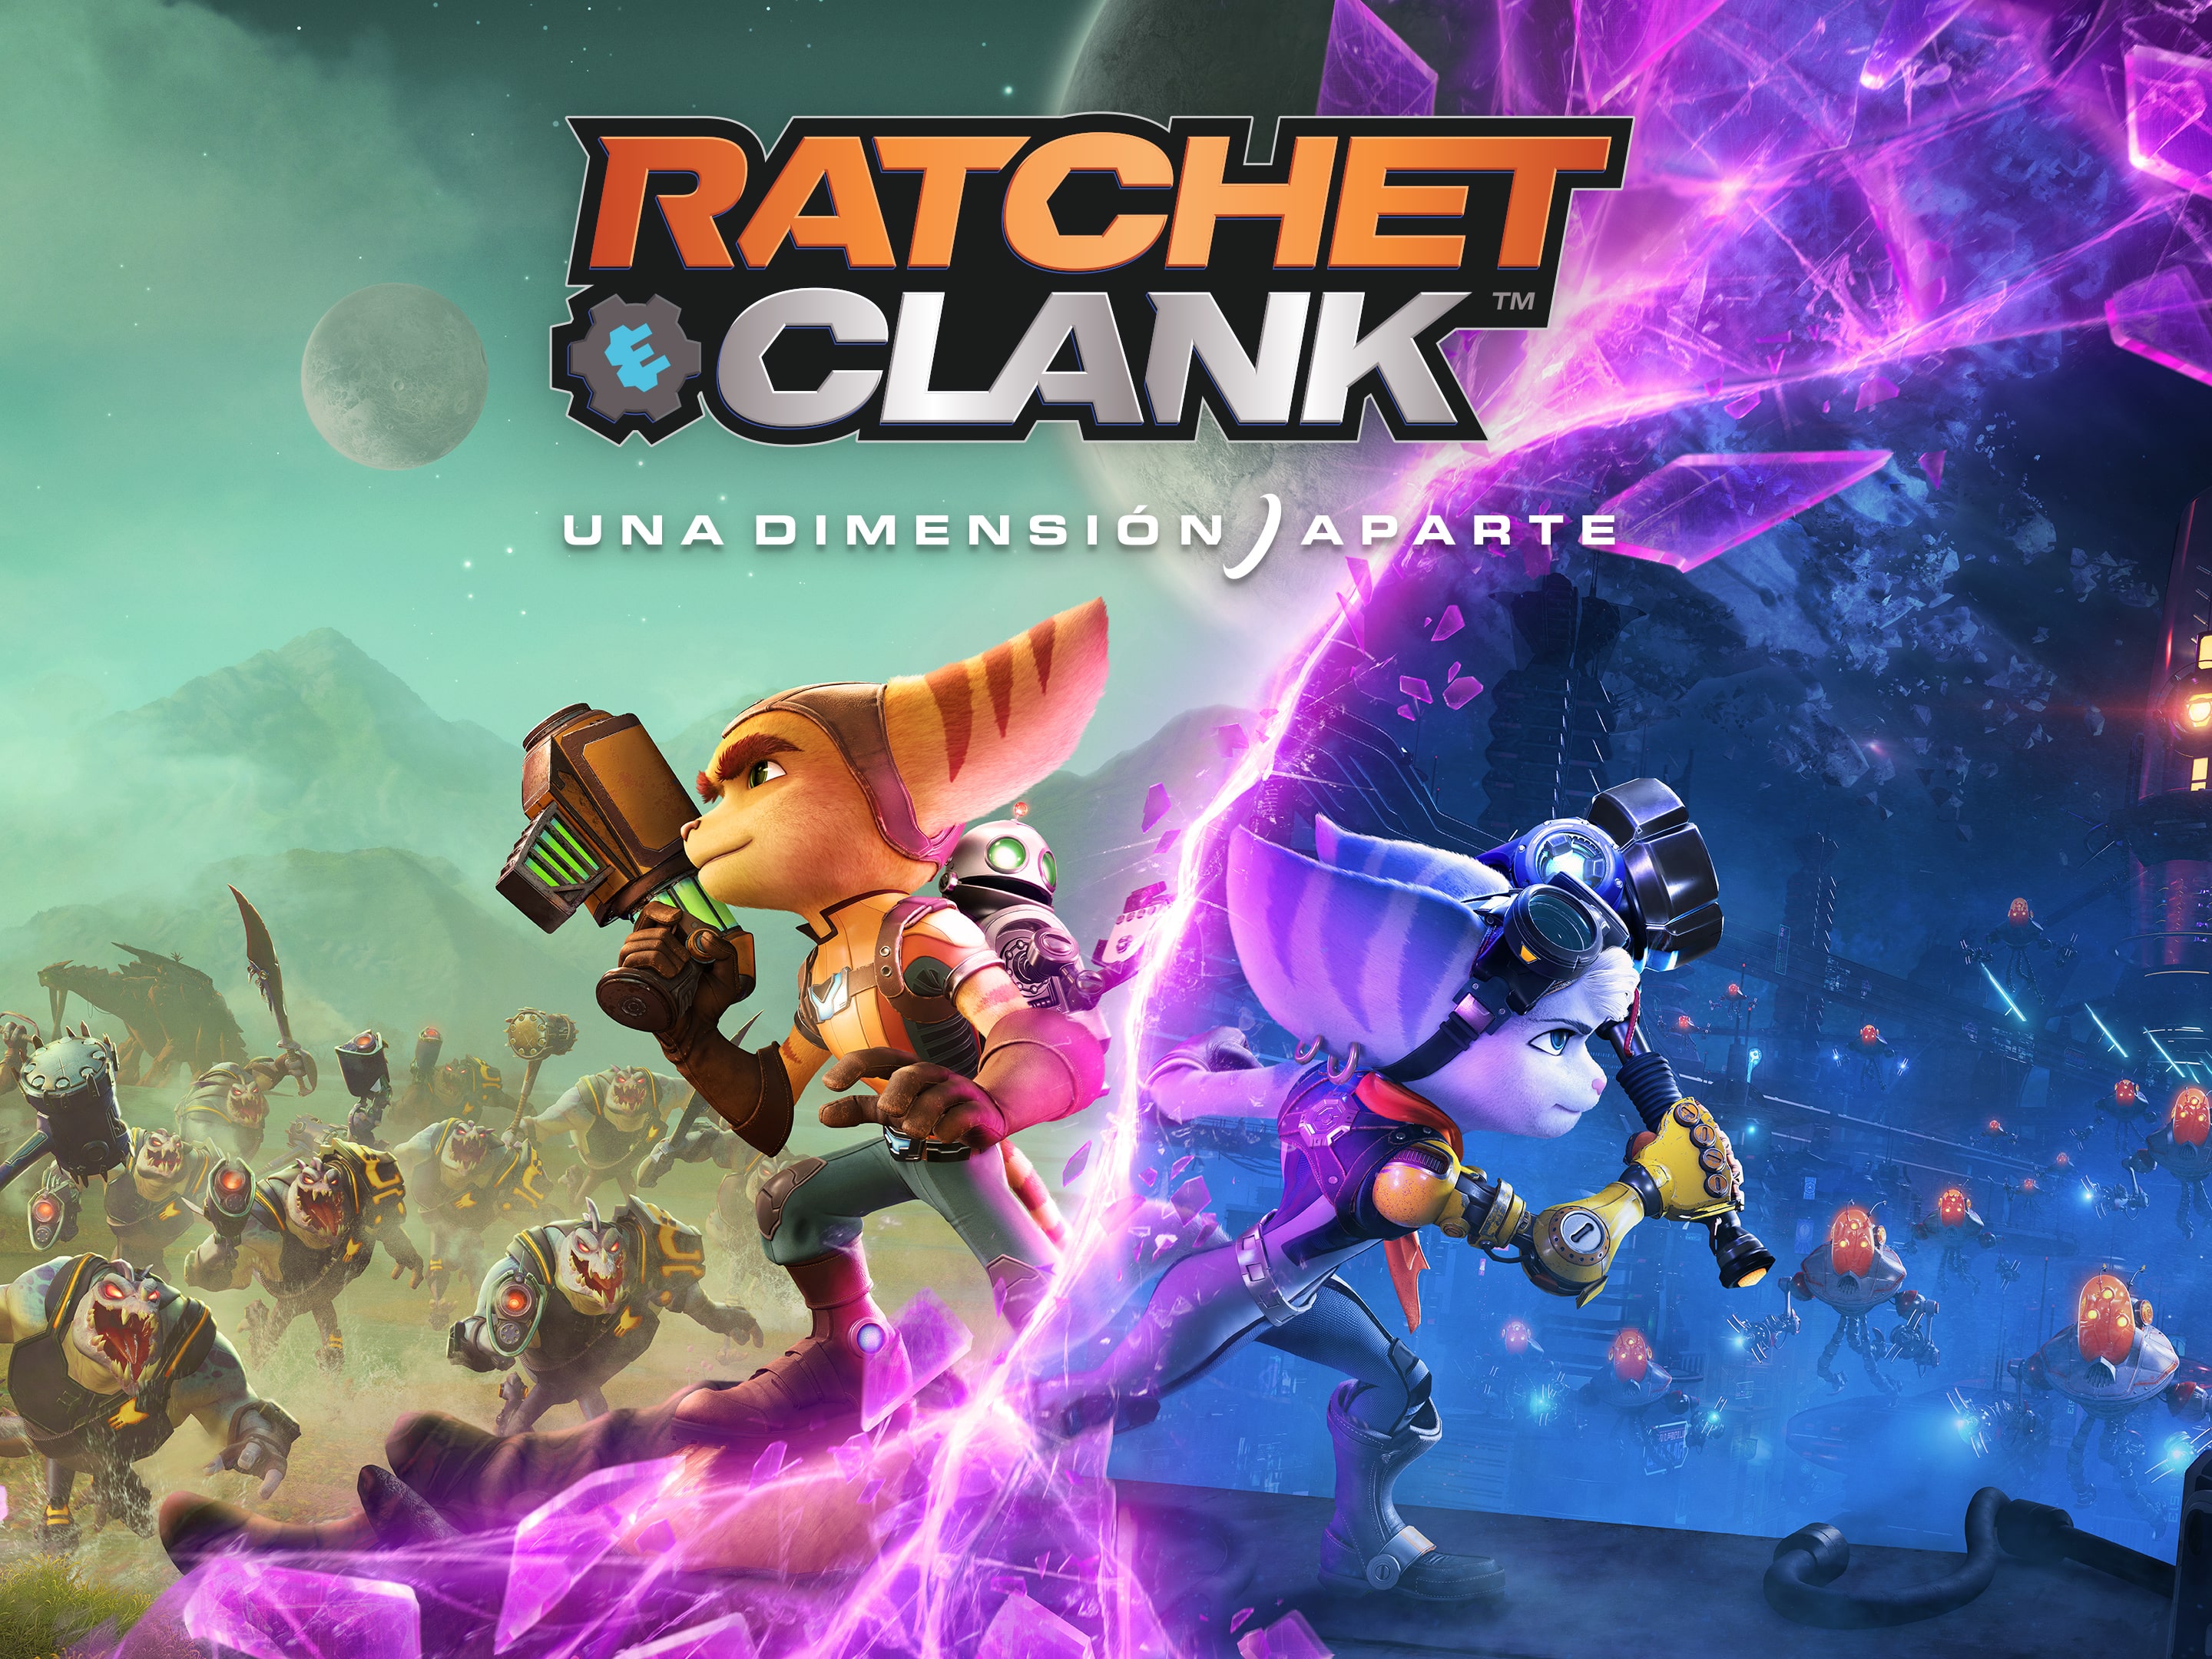 Juego de Aventura PS4 Ratchet & Clank Playstation Hits